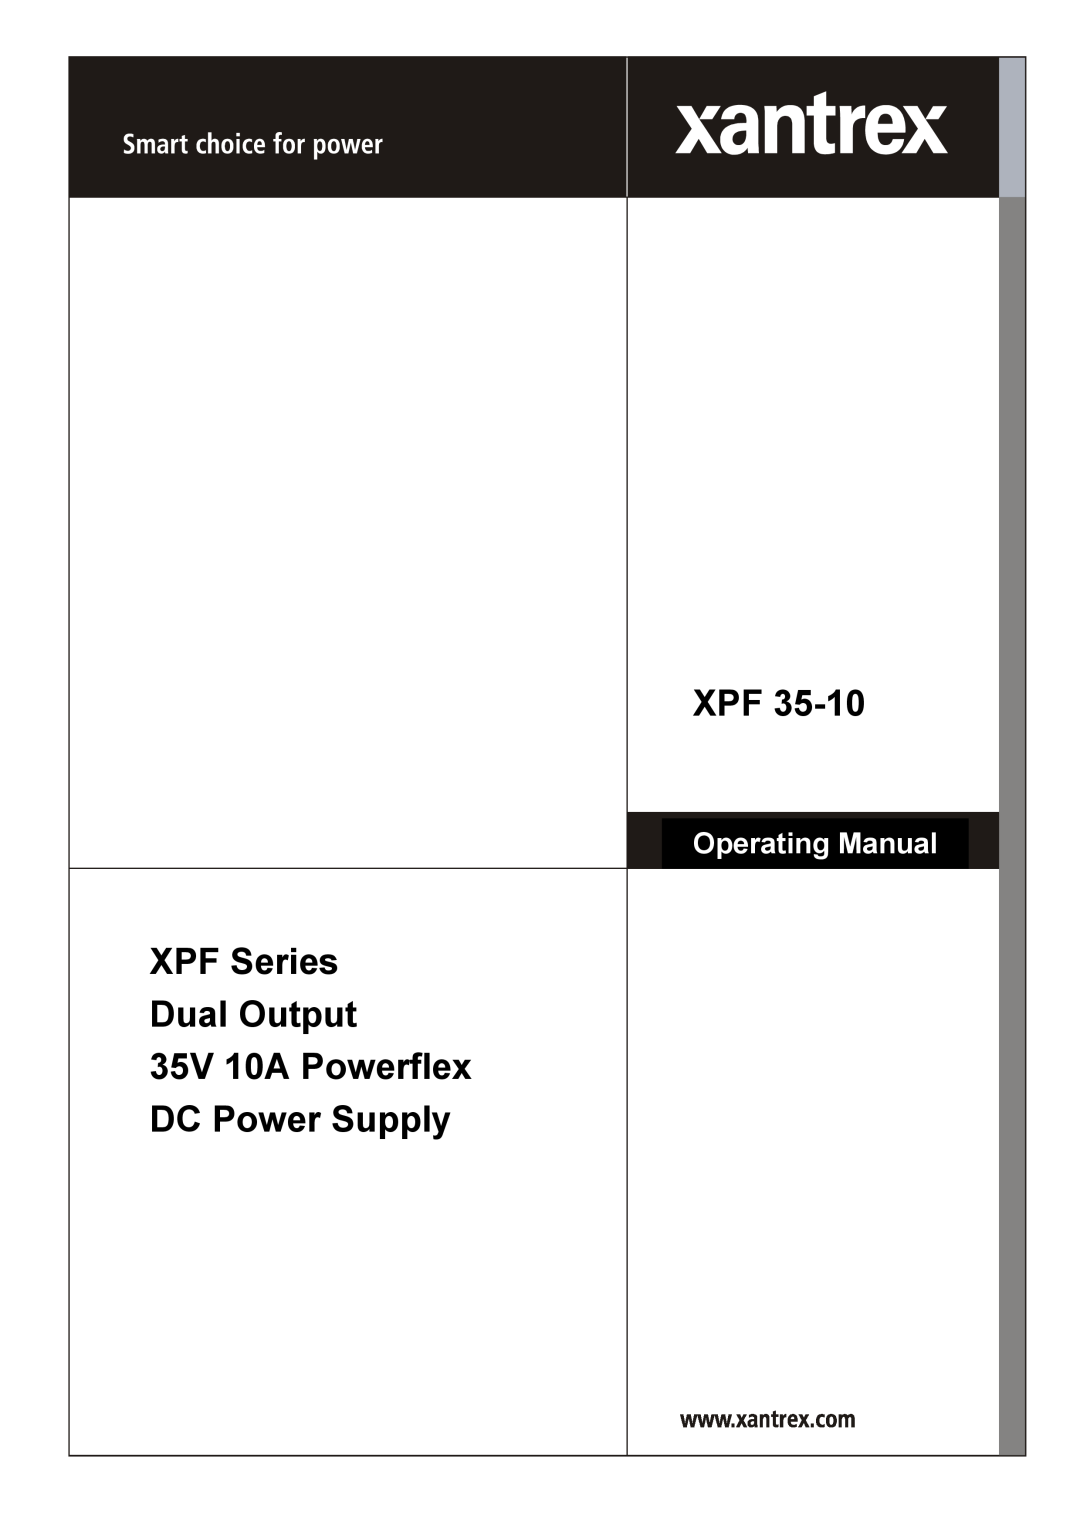 Xantrex Technology XPF 35-10 manual XPF Series Dual Output 35V 10A Powerflex DC Power Supply, Operating Manual 